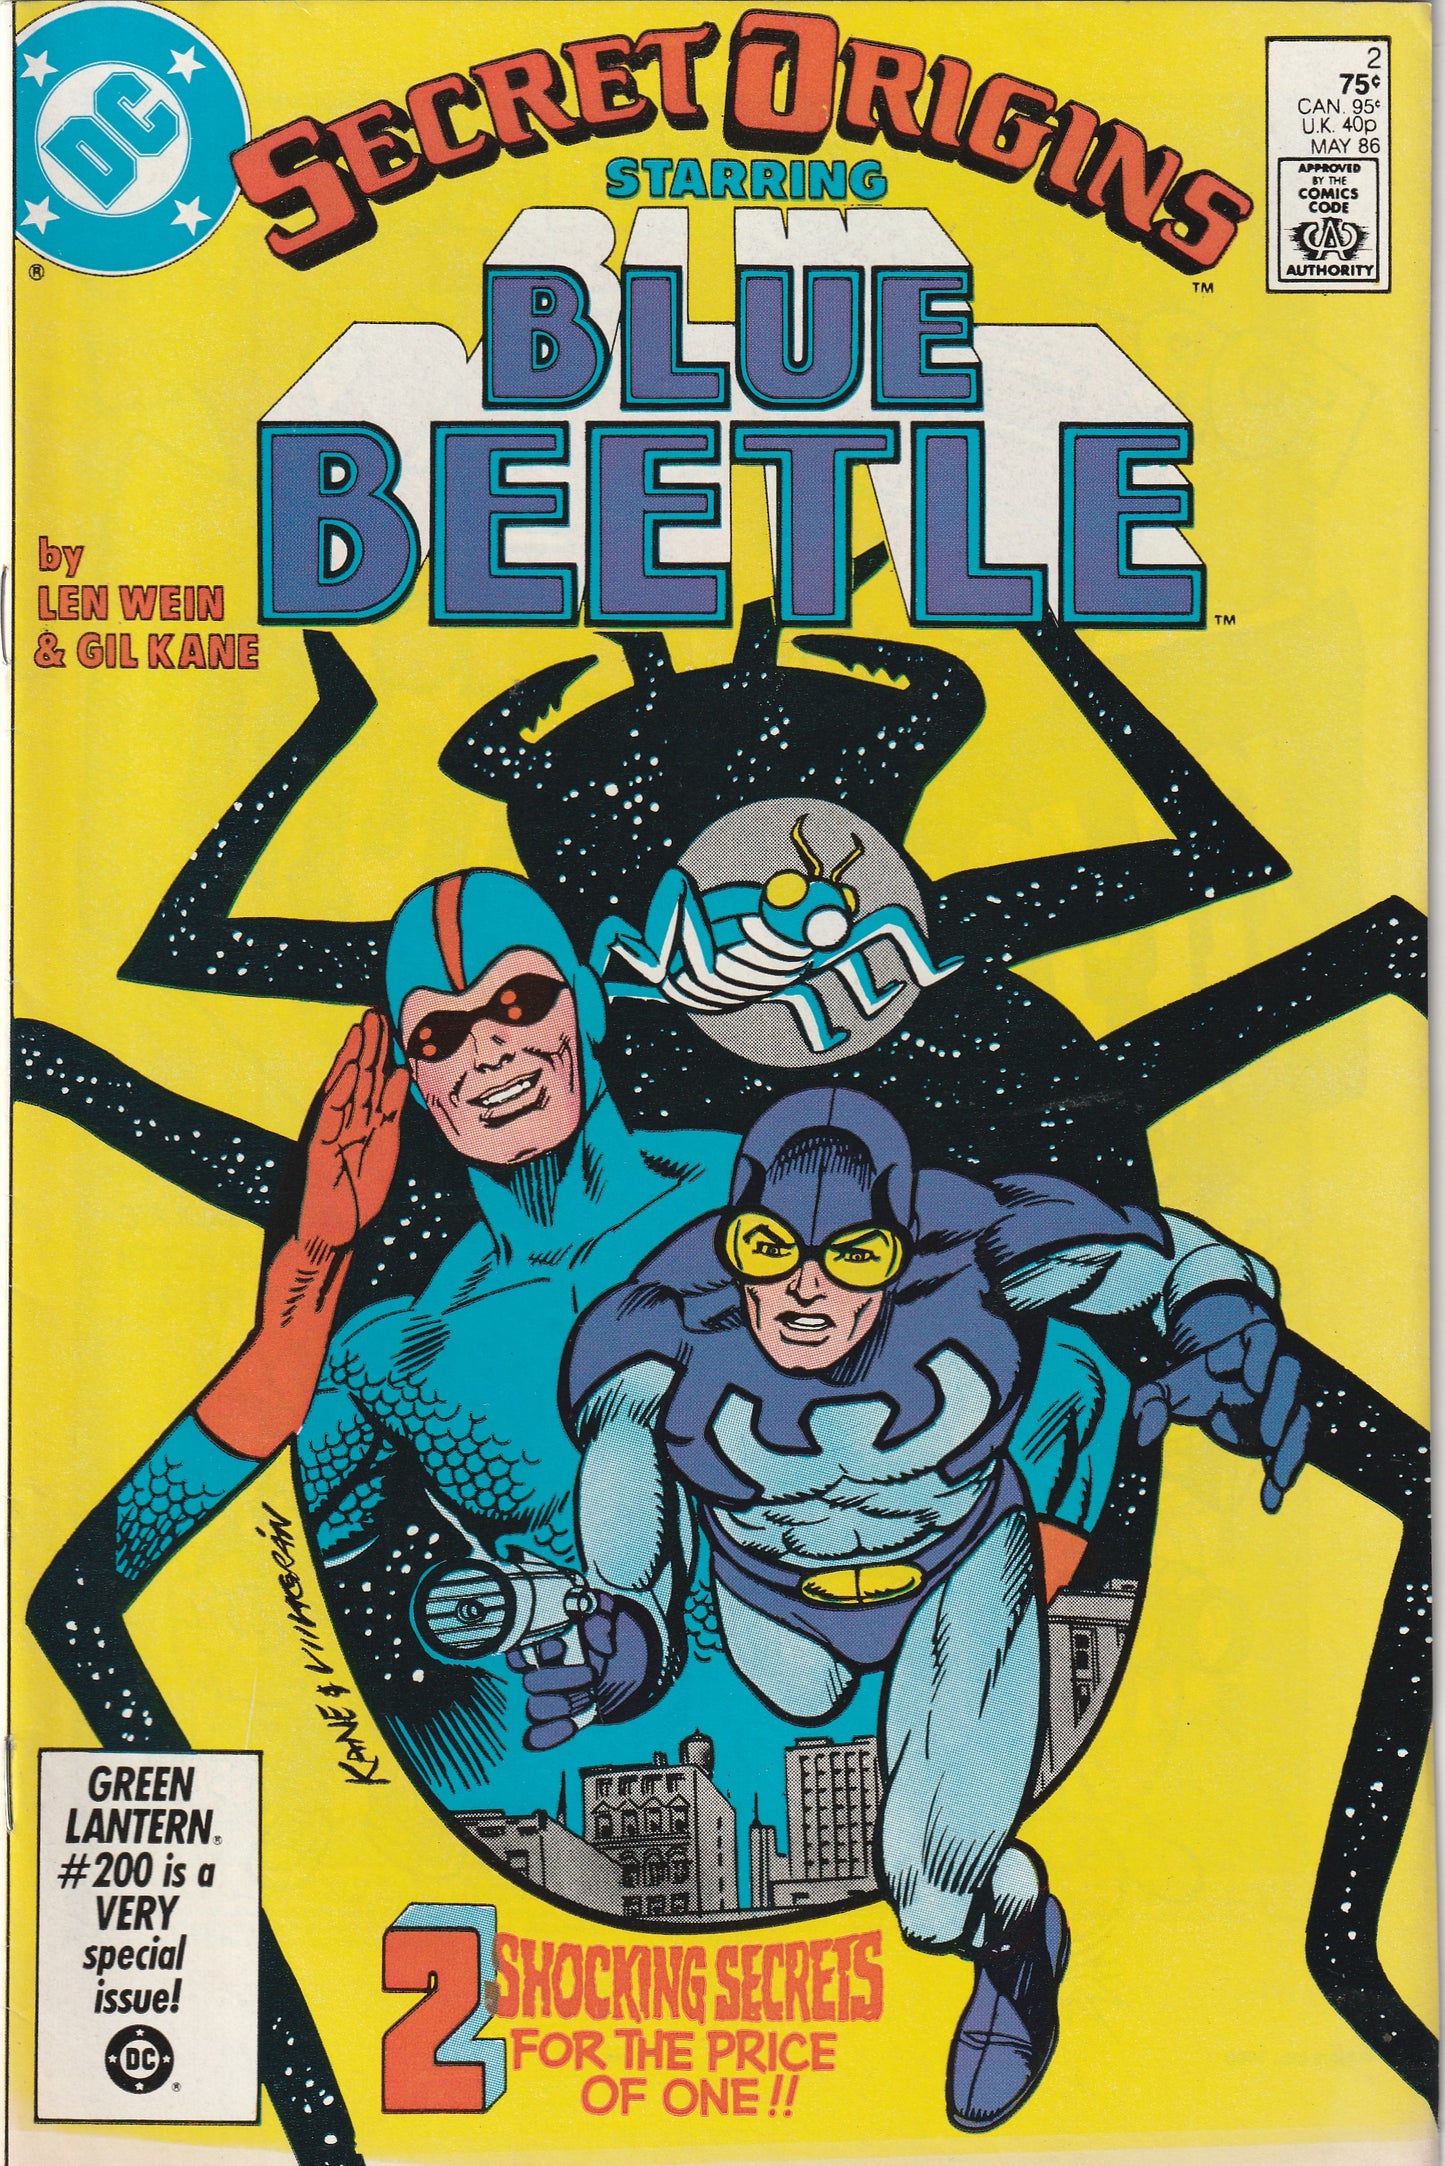 Secret Origins #2 (1986) - Blue Beetle